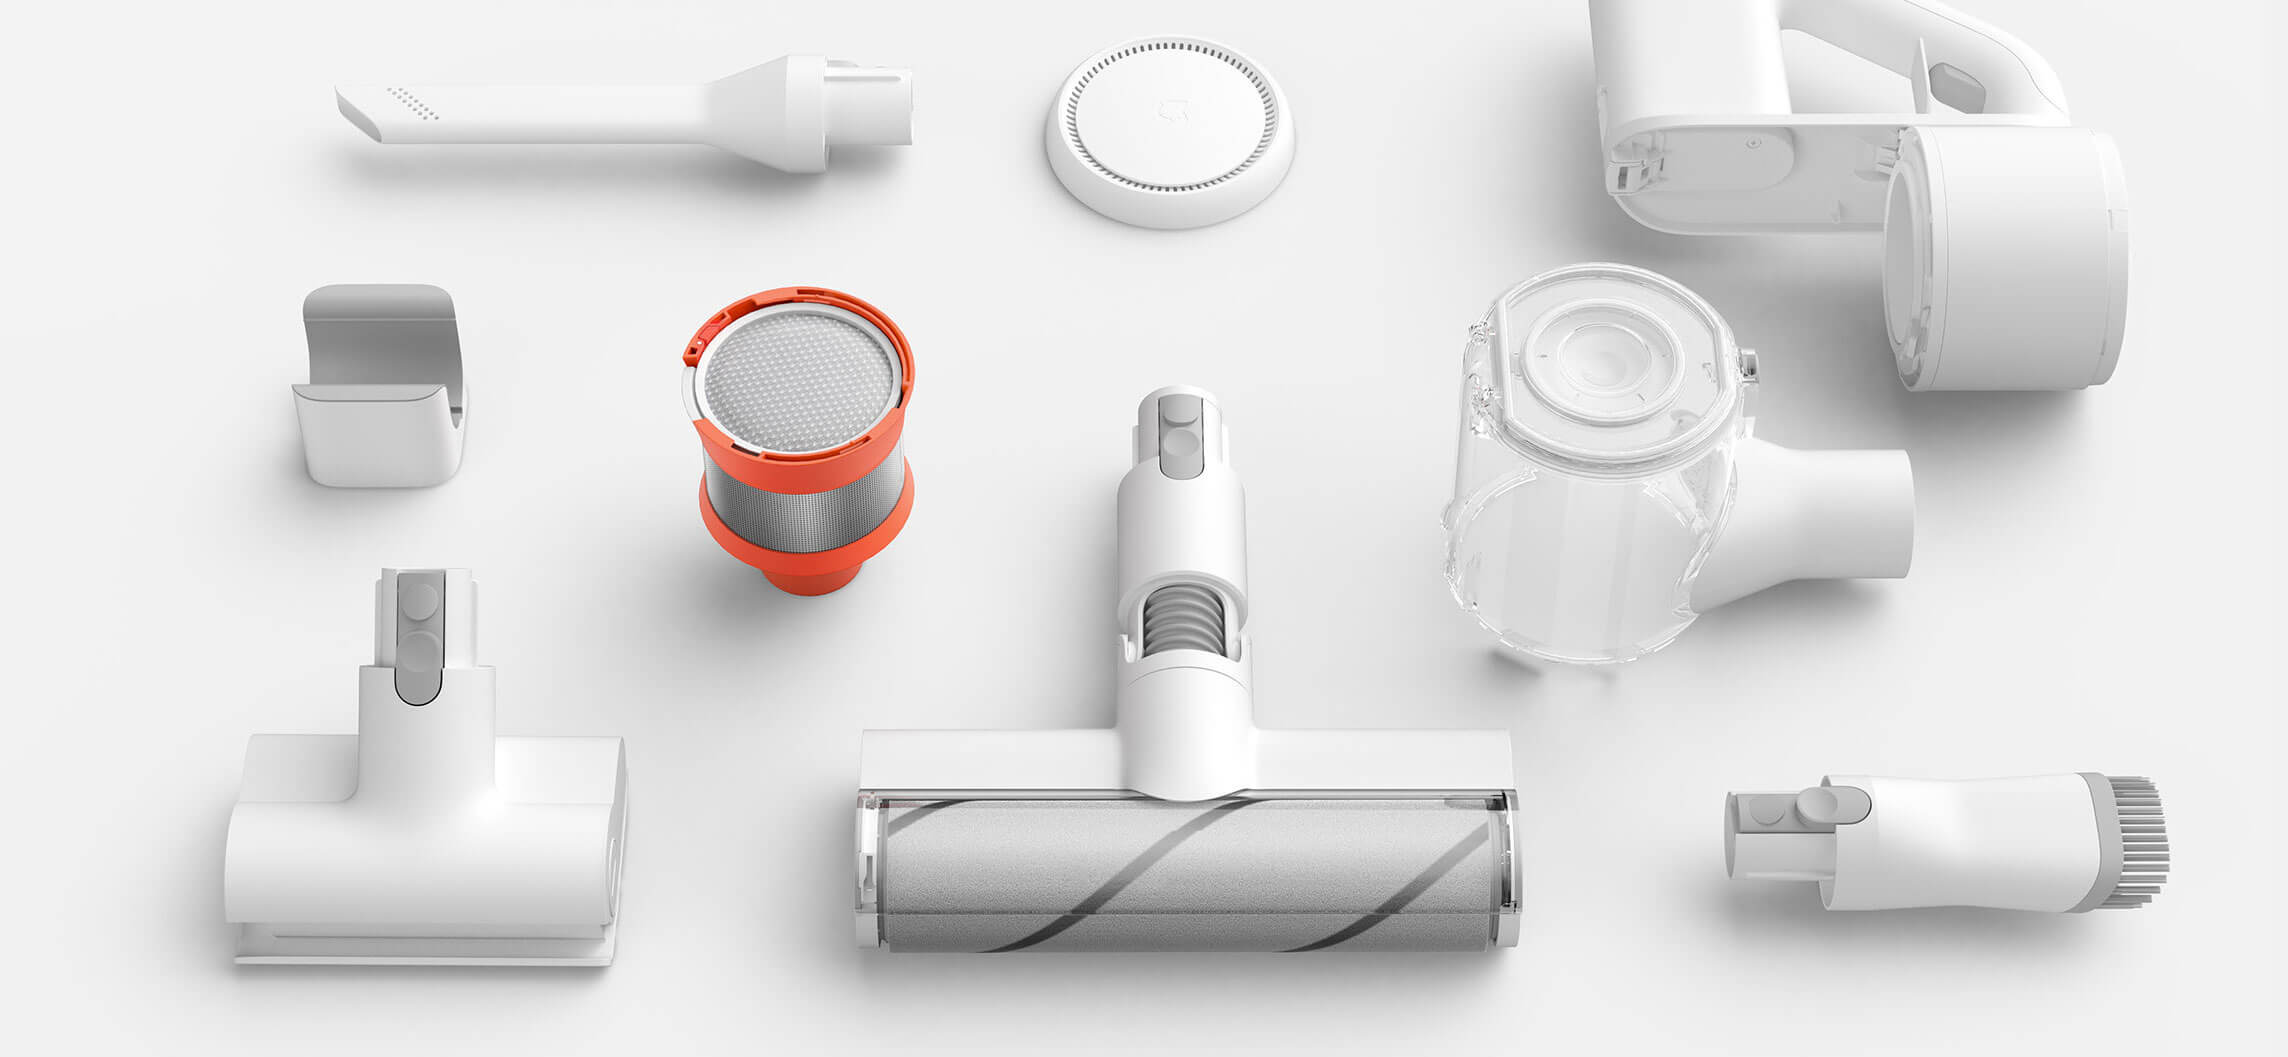 Xiaomi Mi Handheld Vacuum Cleaner výber z mnohých nástavcov